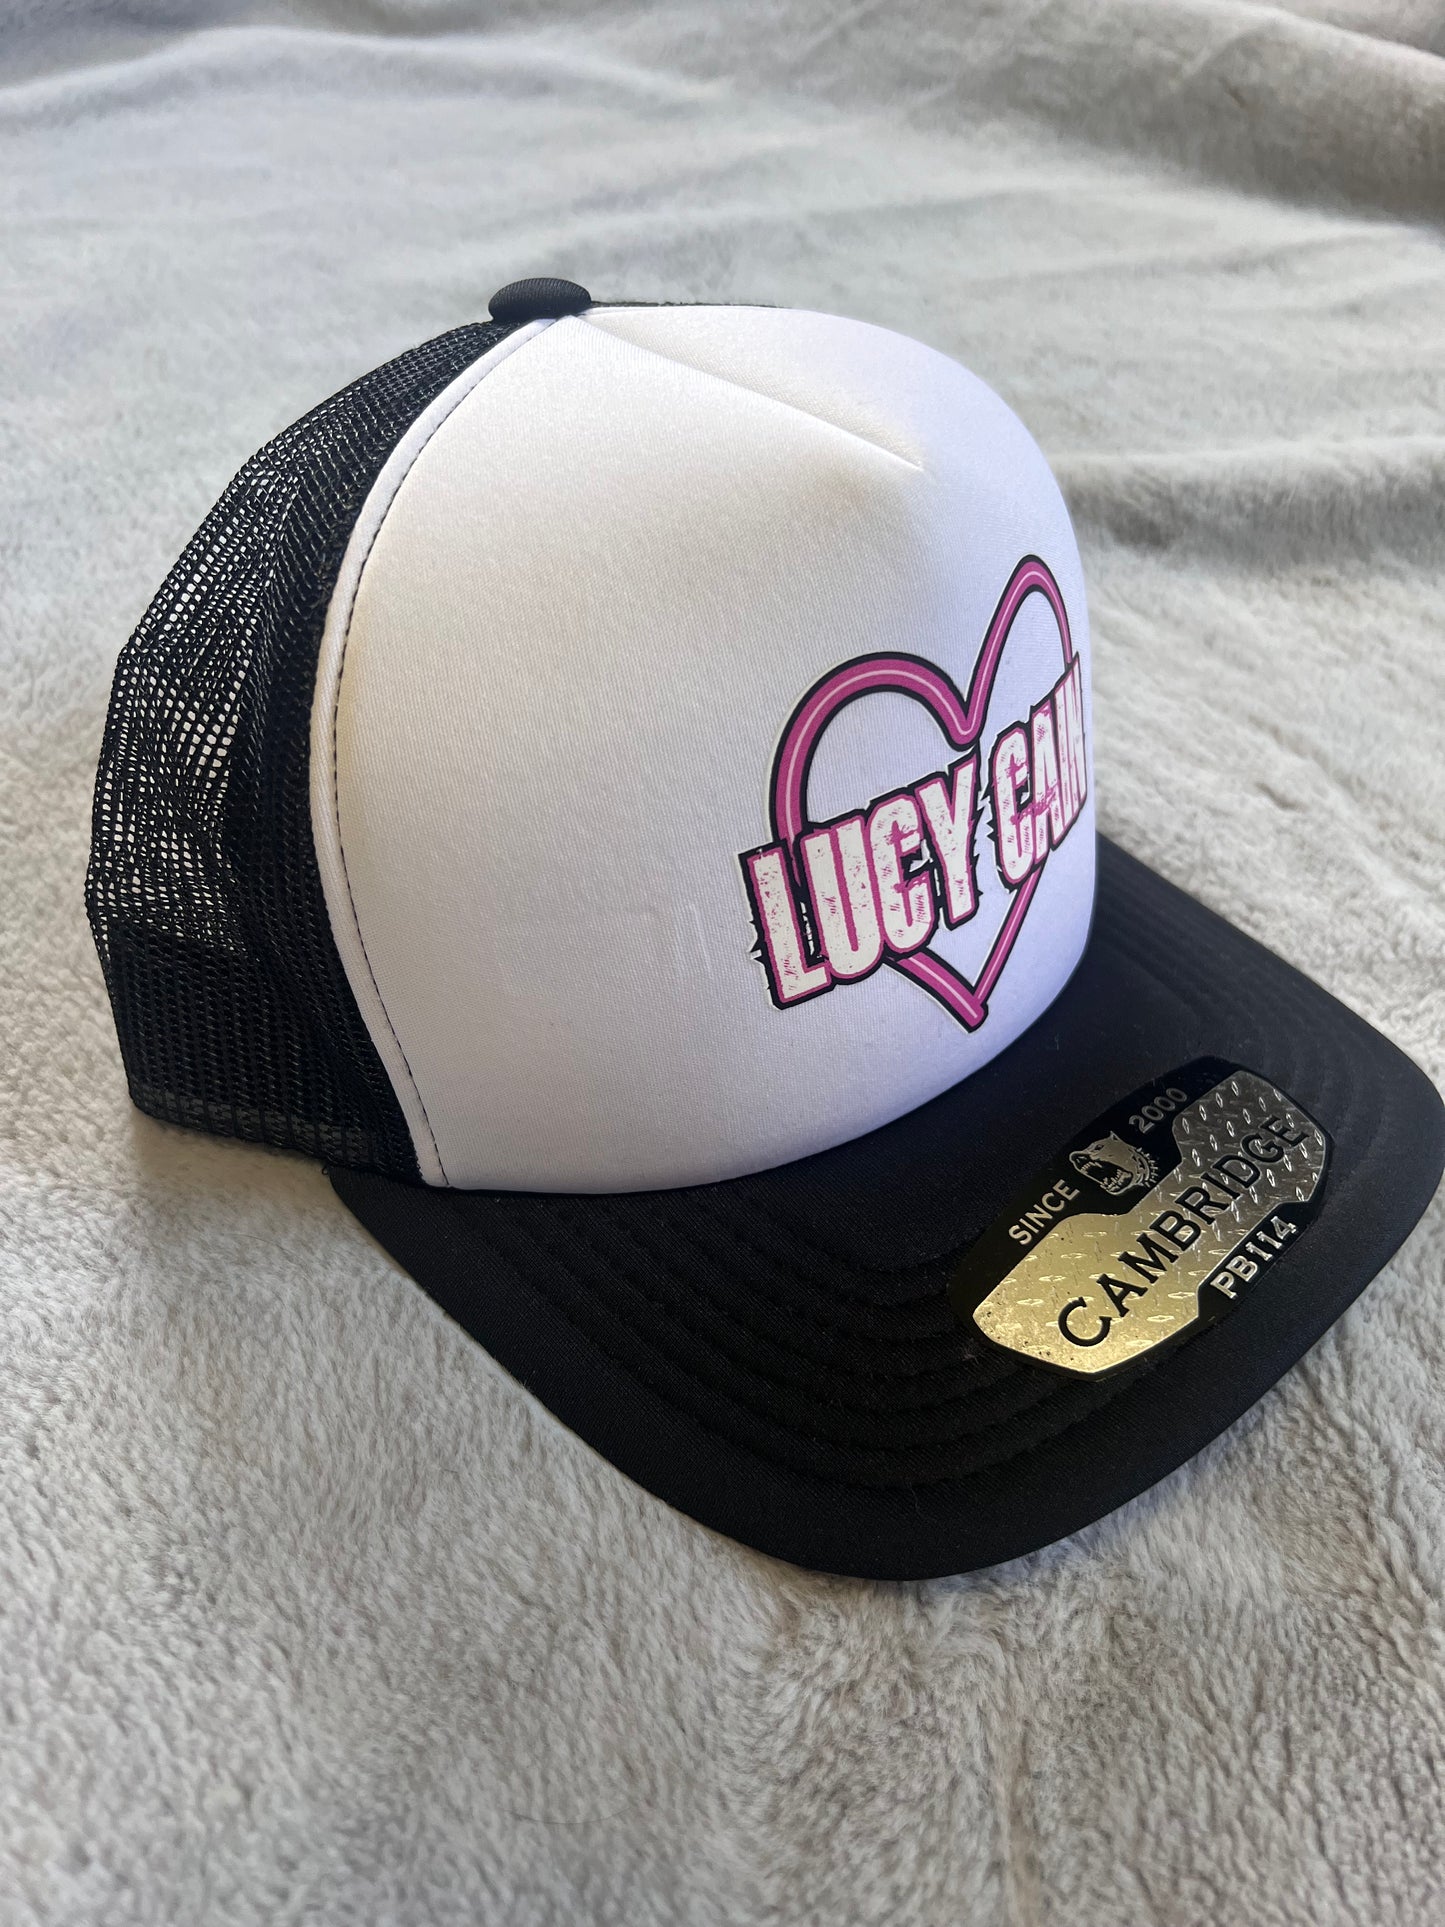 Lucy Cain Trucker Hat